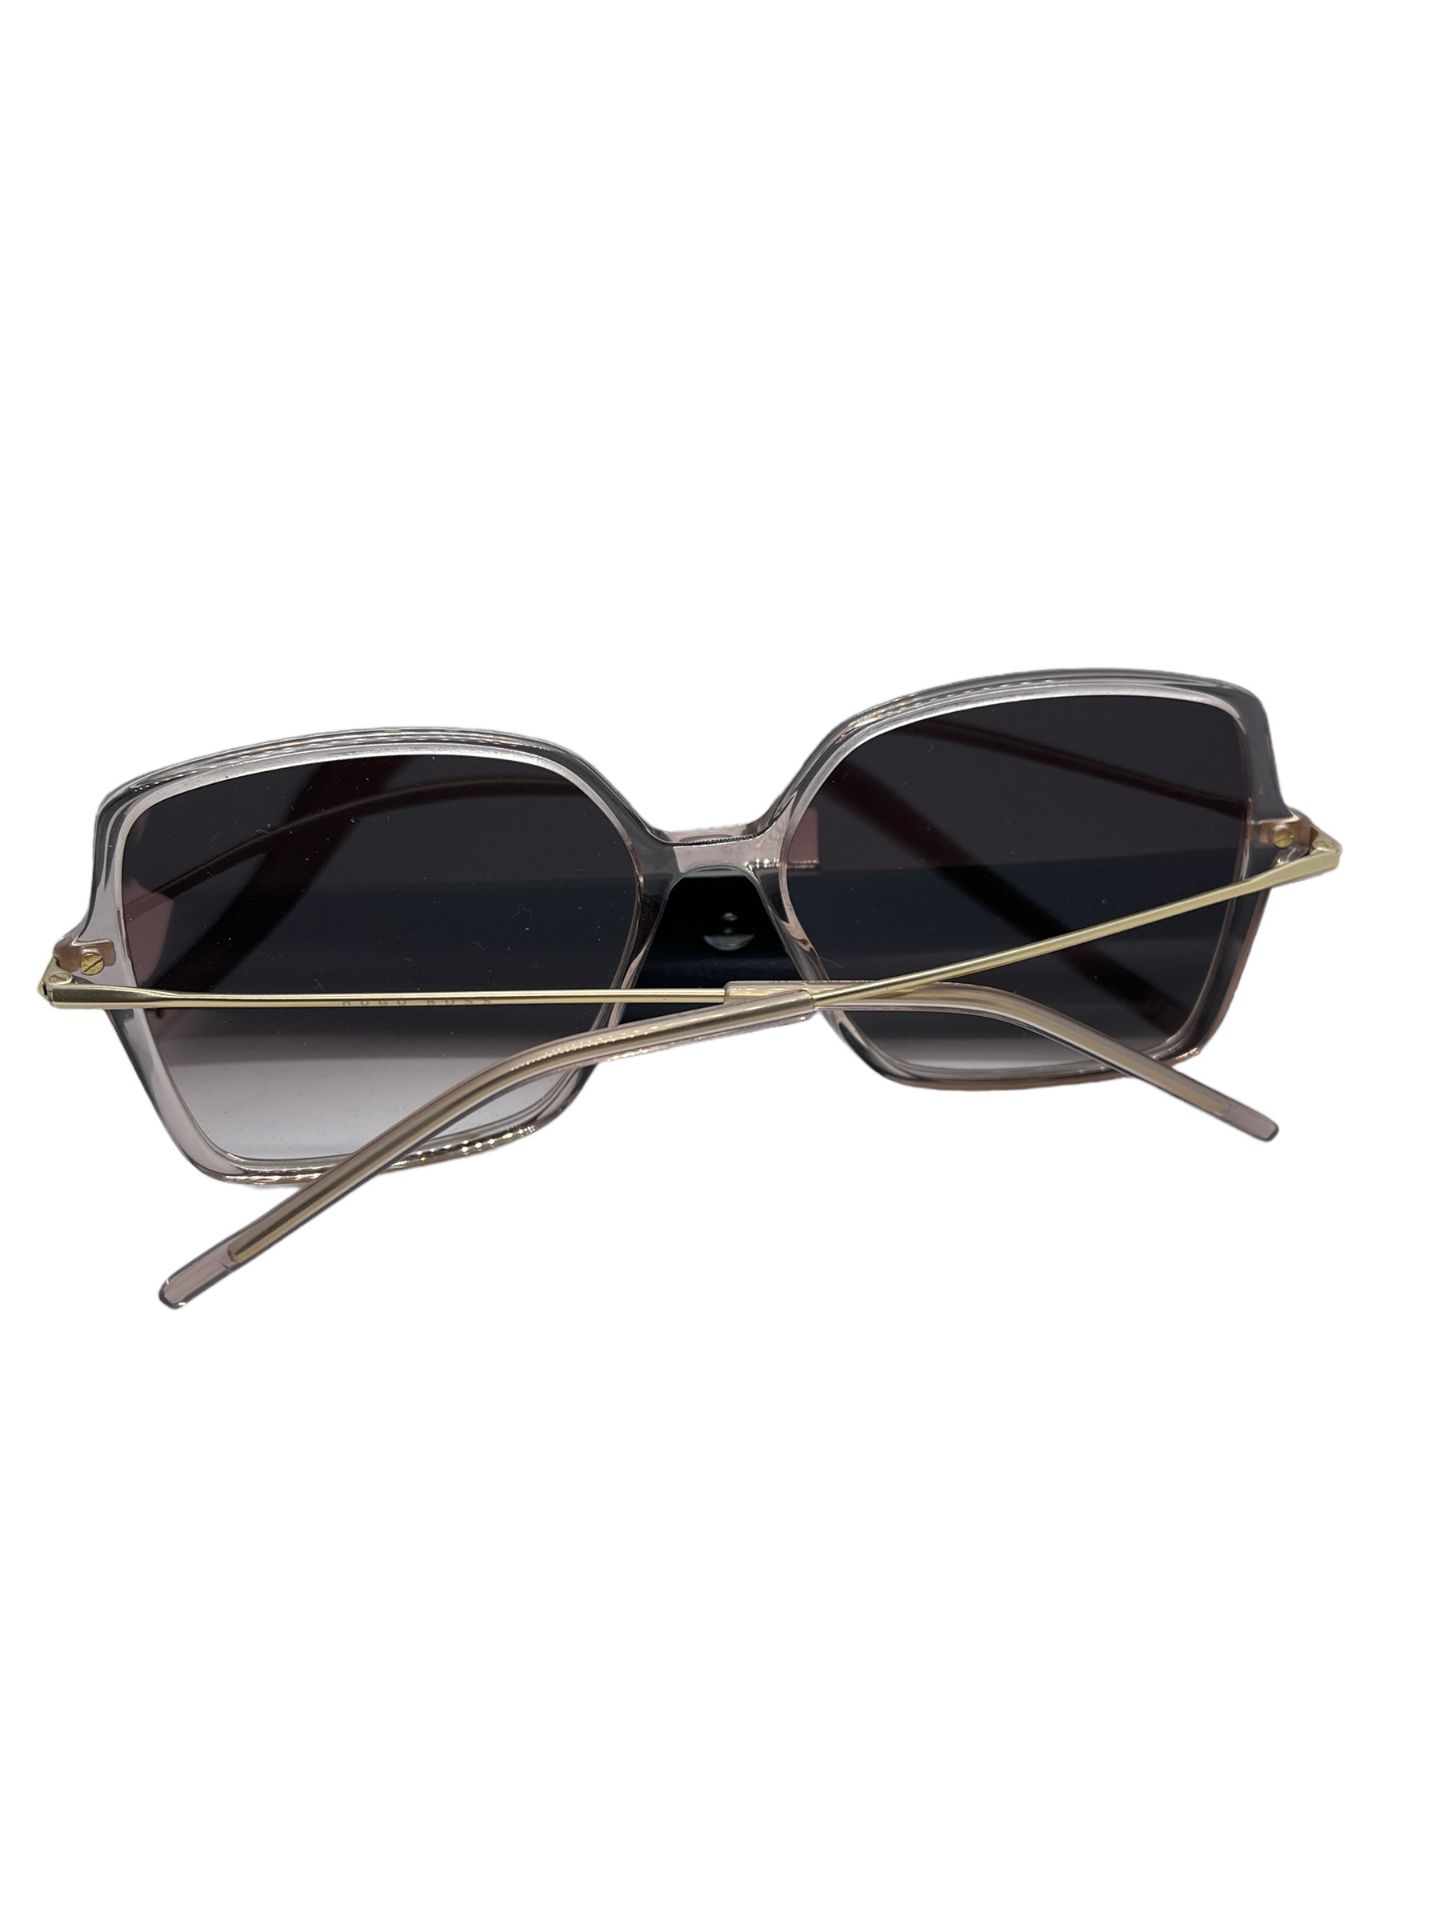 Hugo boss ladies big sunglasses with a case x demon - Image 5 of 8